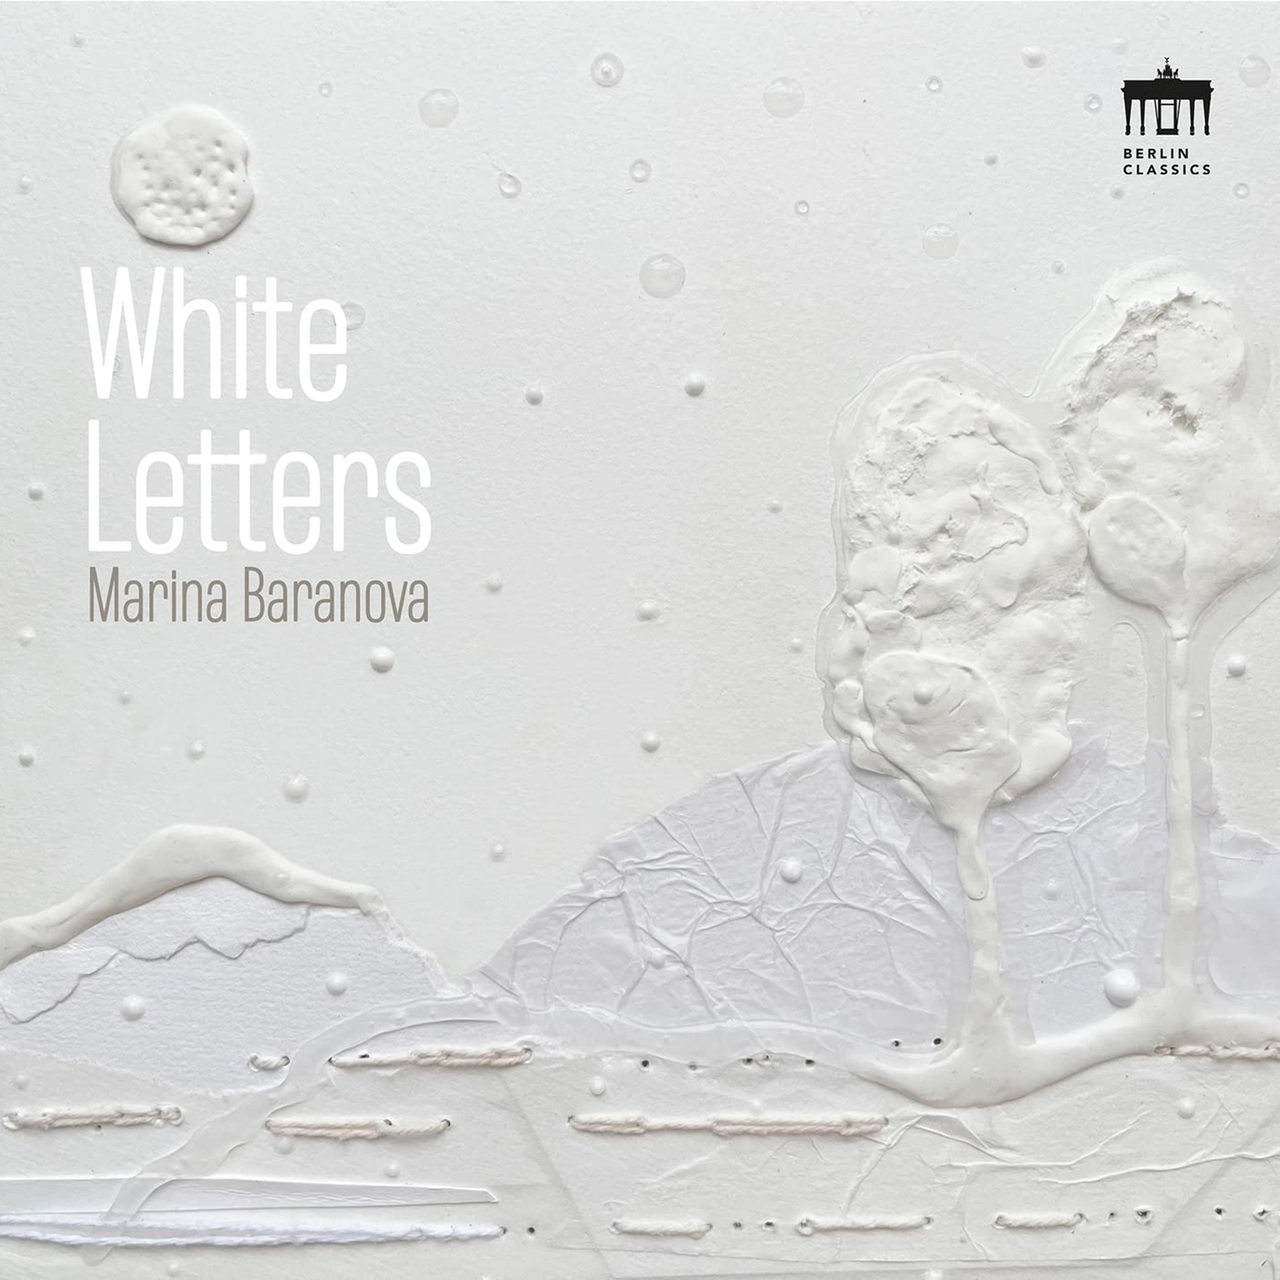 Marina Baranova White Letters